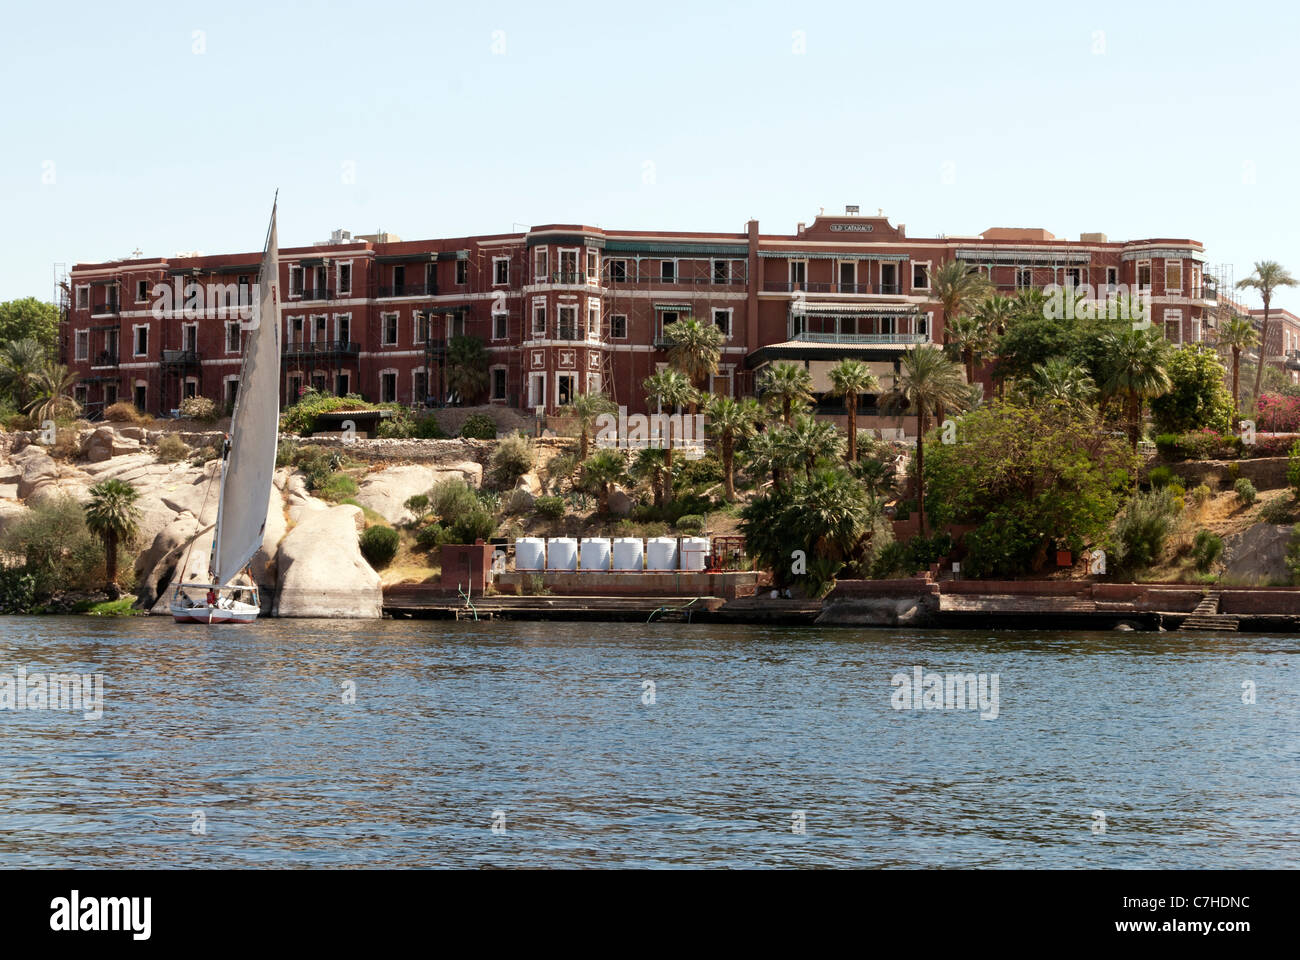 Old Cataract Hotel - Aswan, Upper Egypt Stock Photo